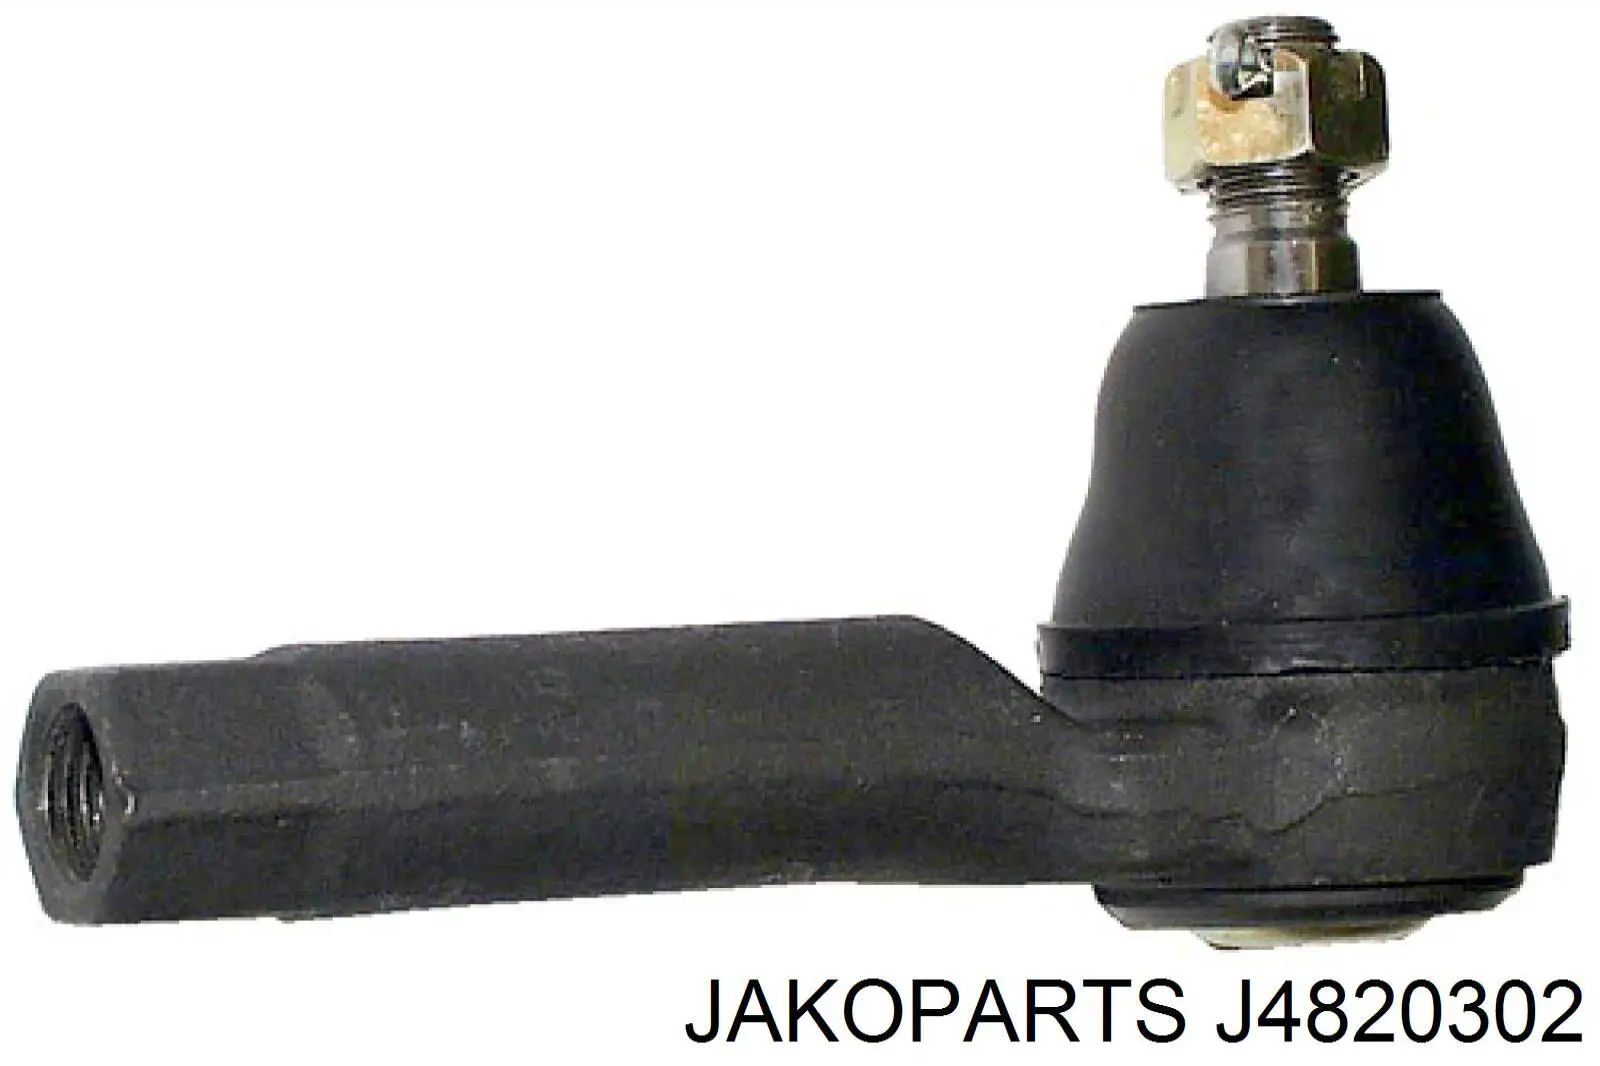 Rótula barra de acoplamiento exterior J4820302 Jakoparts